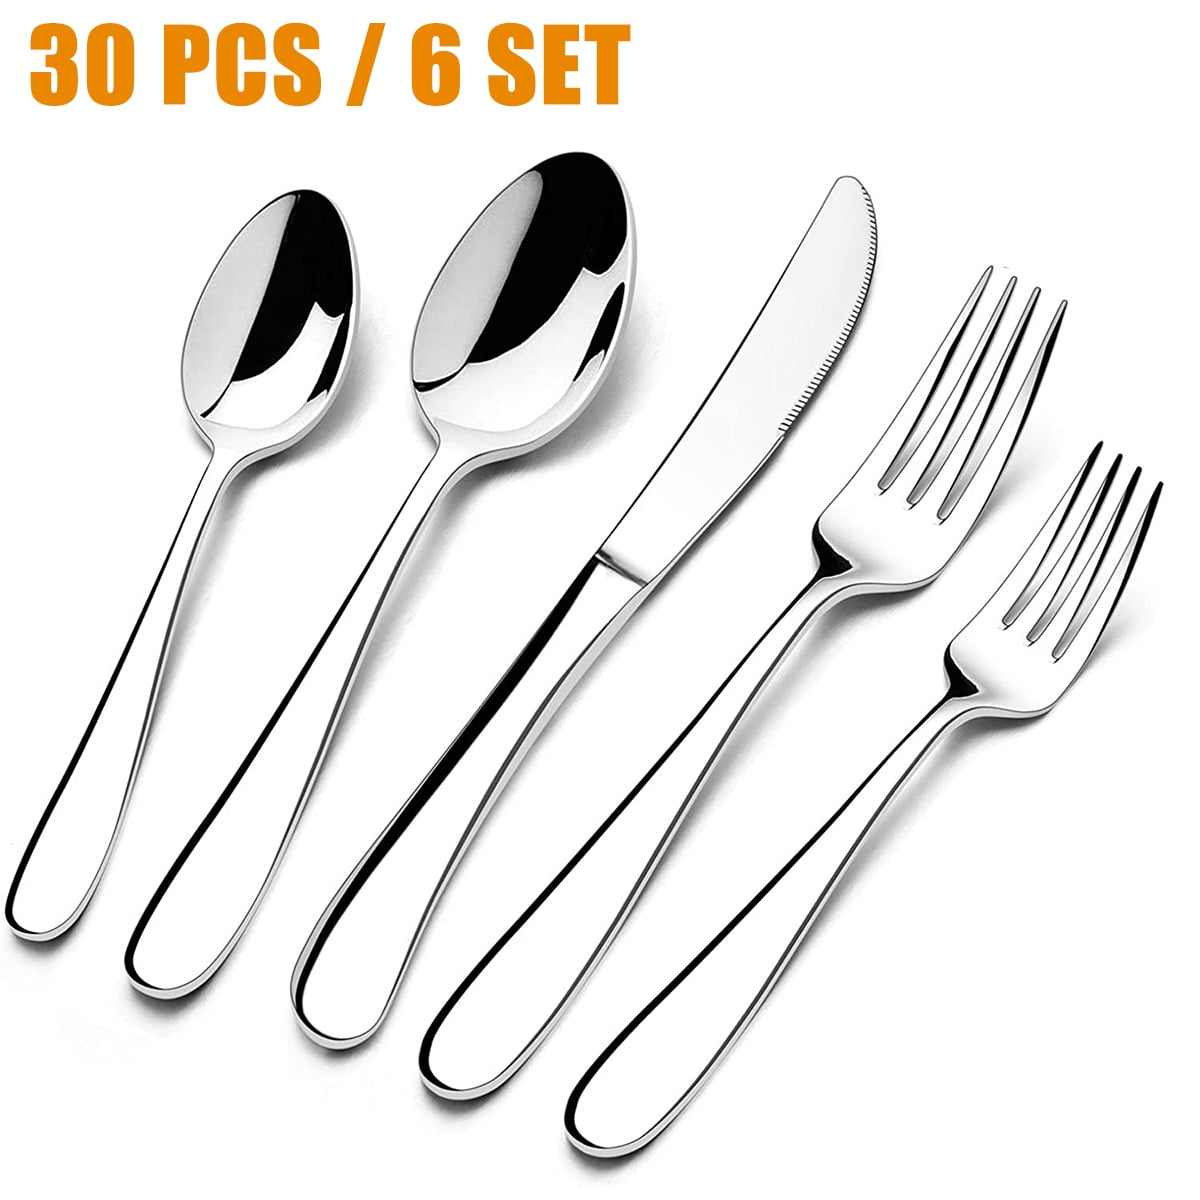 30 Pieces Silverware Set with Serving Set, Stainless Steel Modern Flatware Eating Utensils Set, Includes Forks/Spoons/Dinner Knives, Service for 6, Mirror Polished, Dishwasher Safe